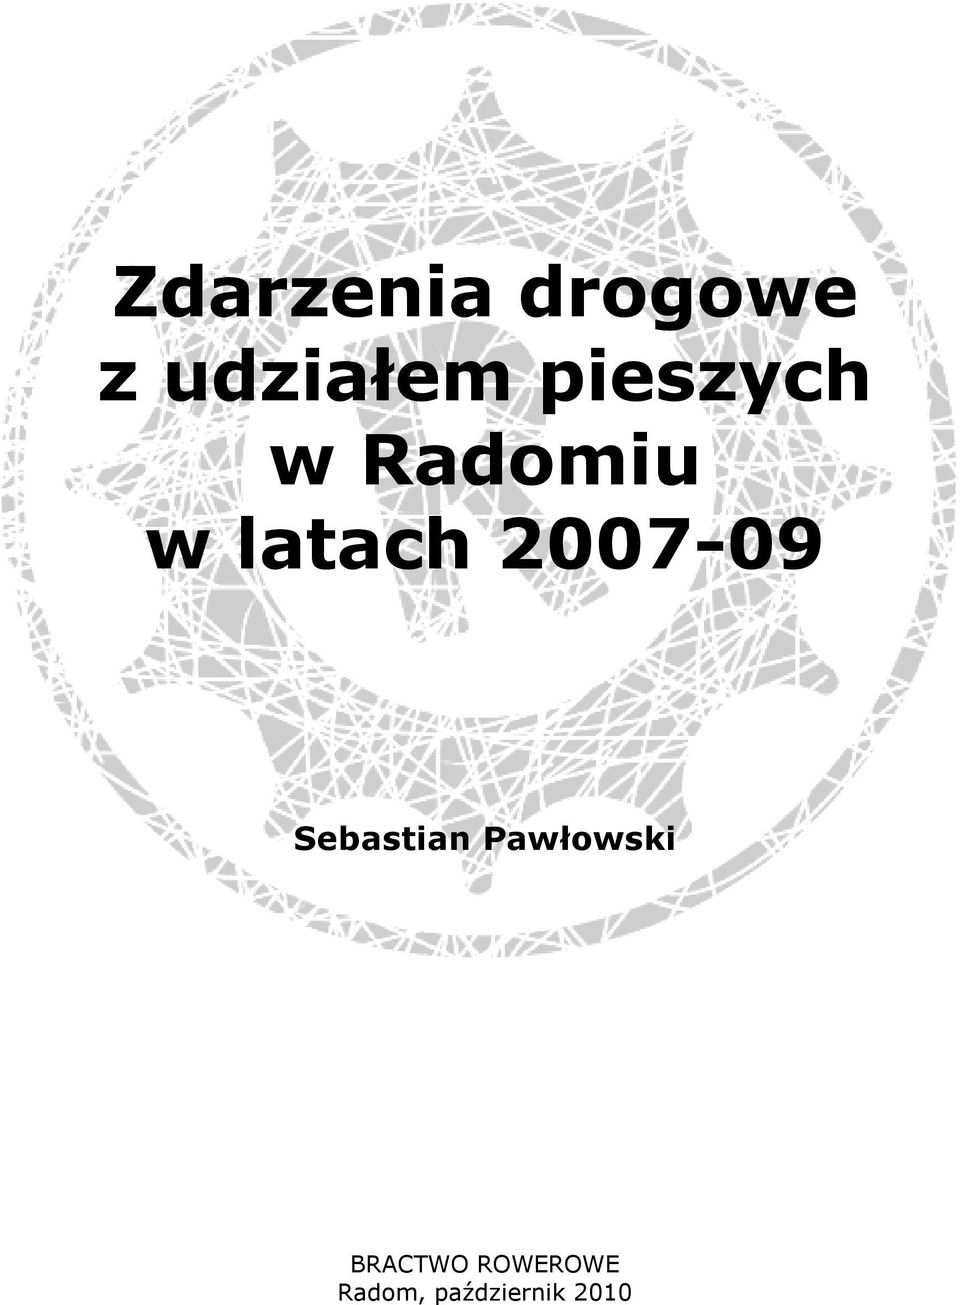 2007-09 Sebastian Pawłowski